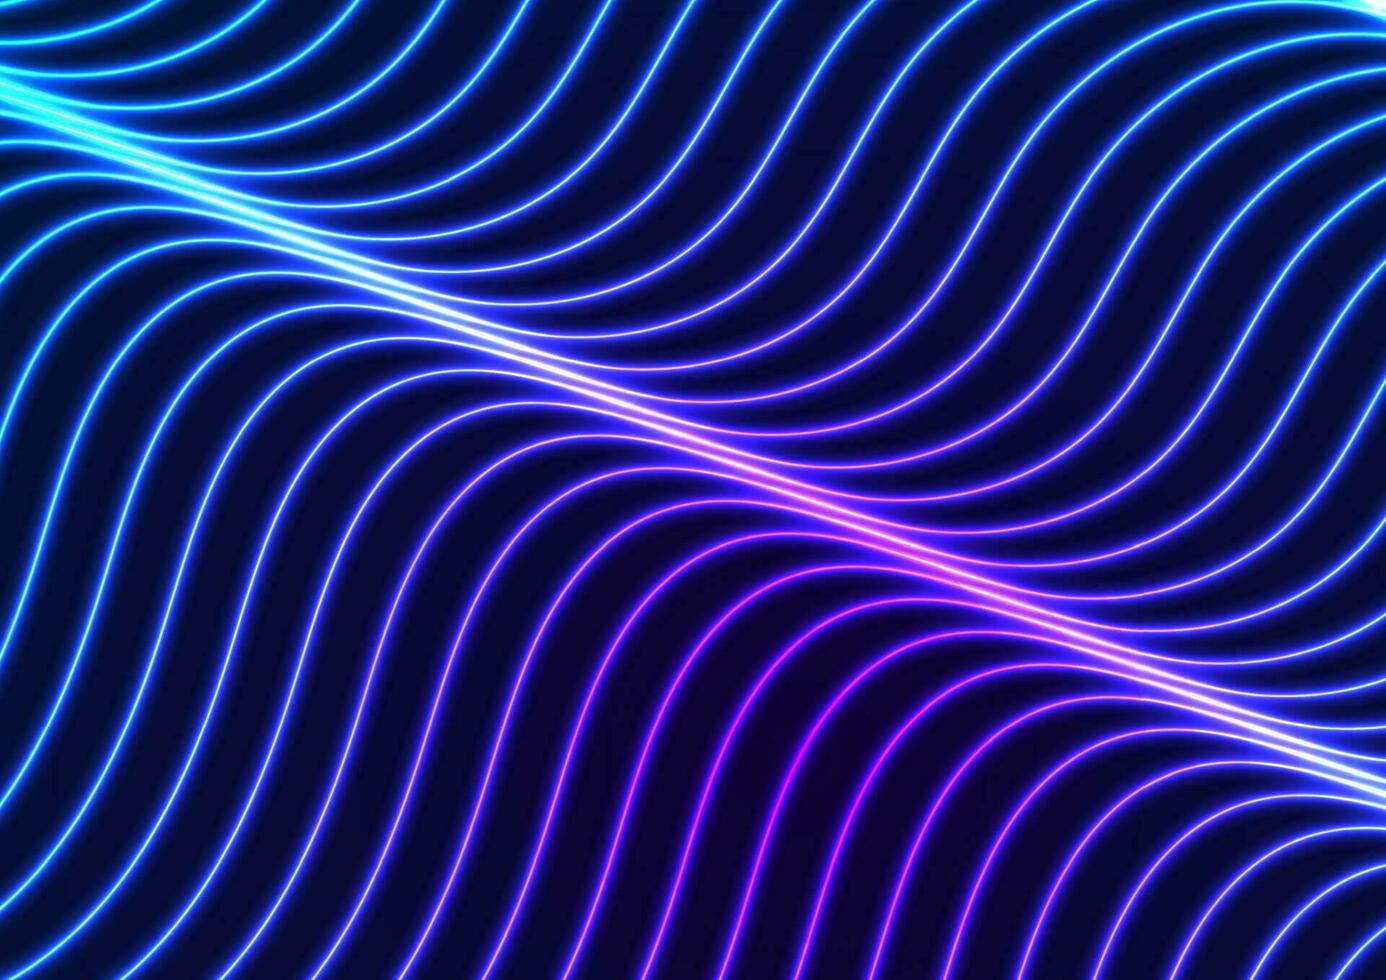 azul ultravioleta néon curvado ondulado linhas abstrato fundo vetor